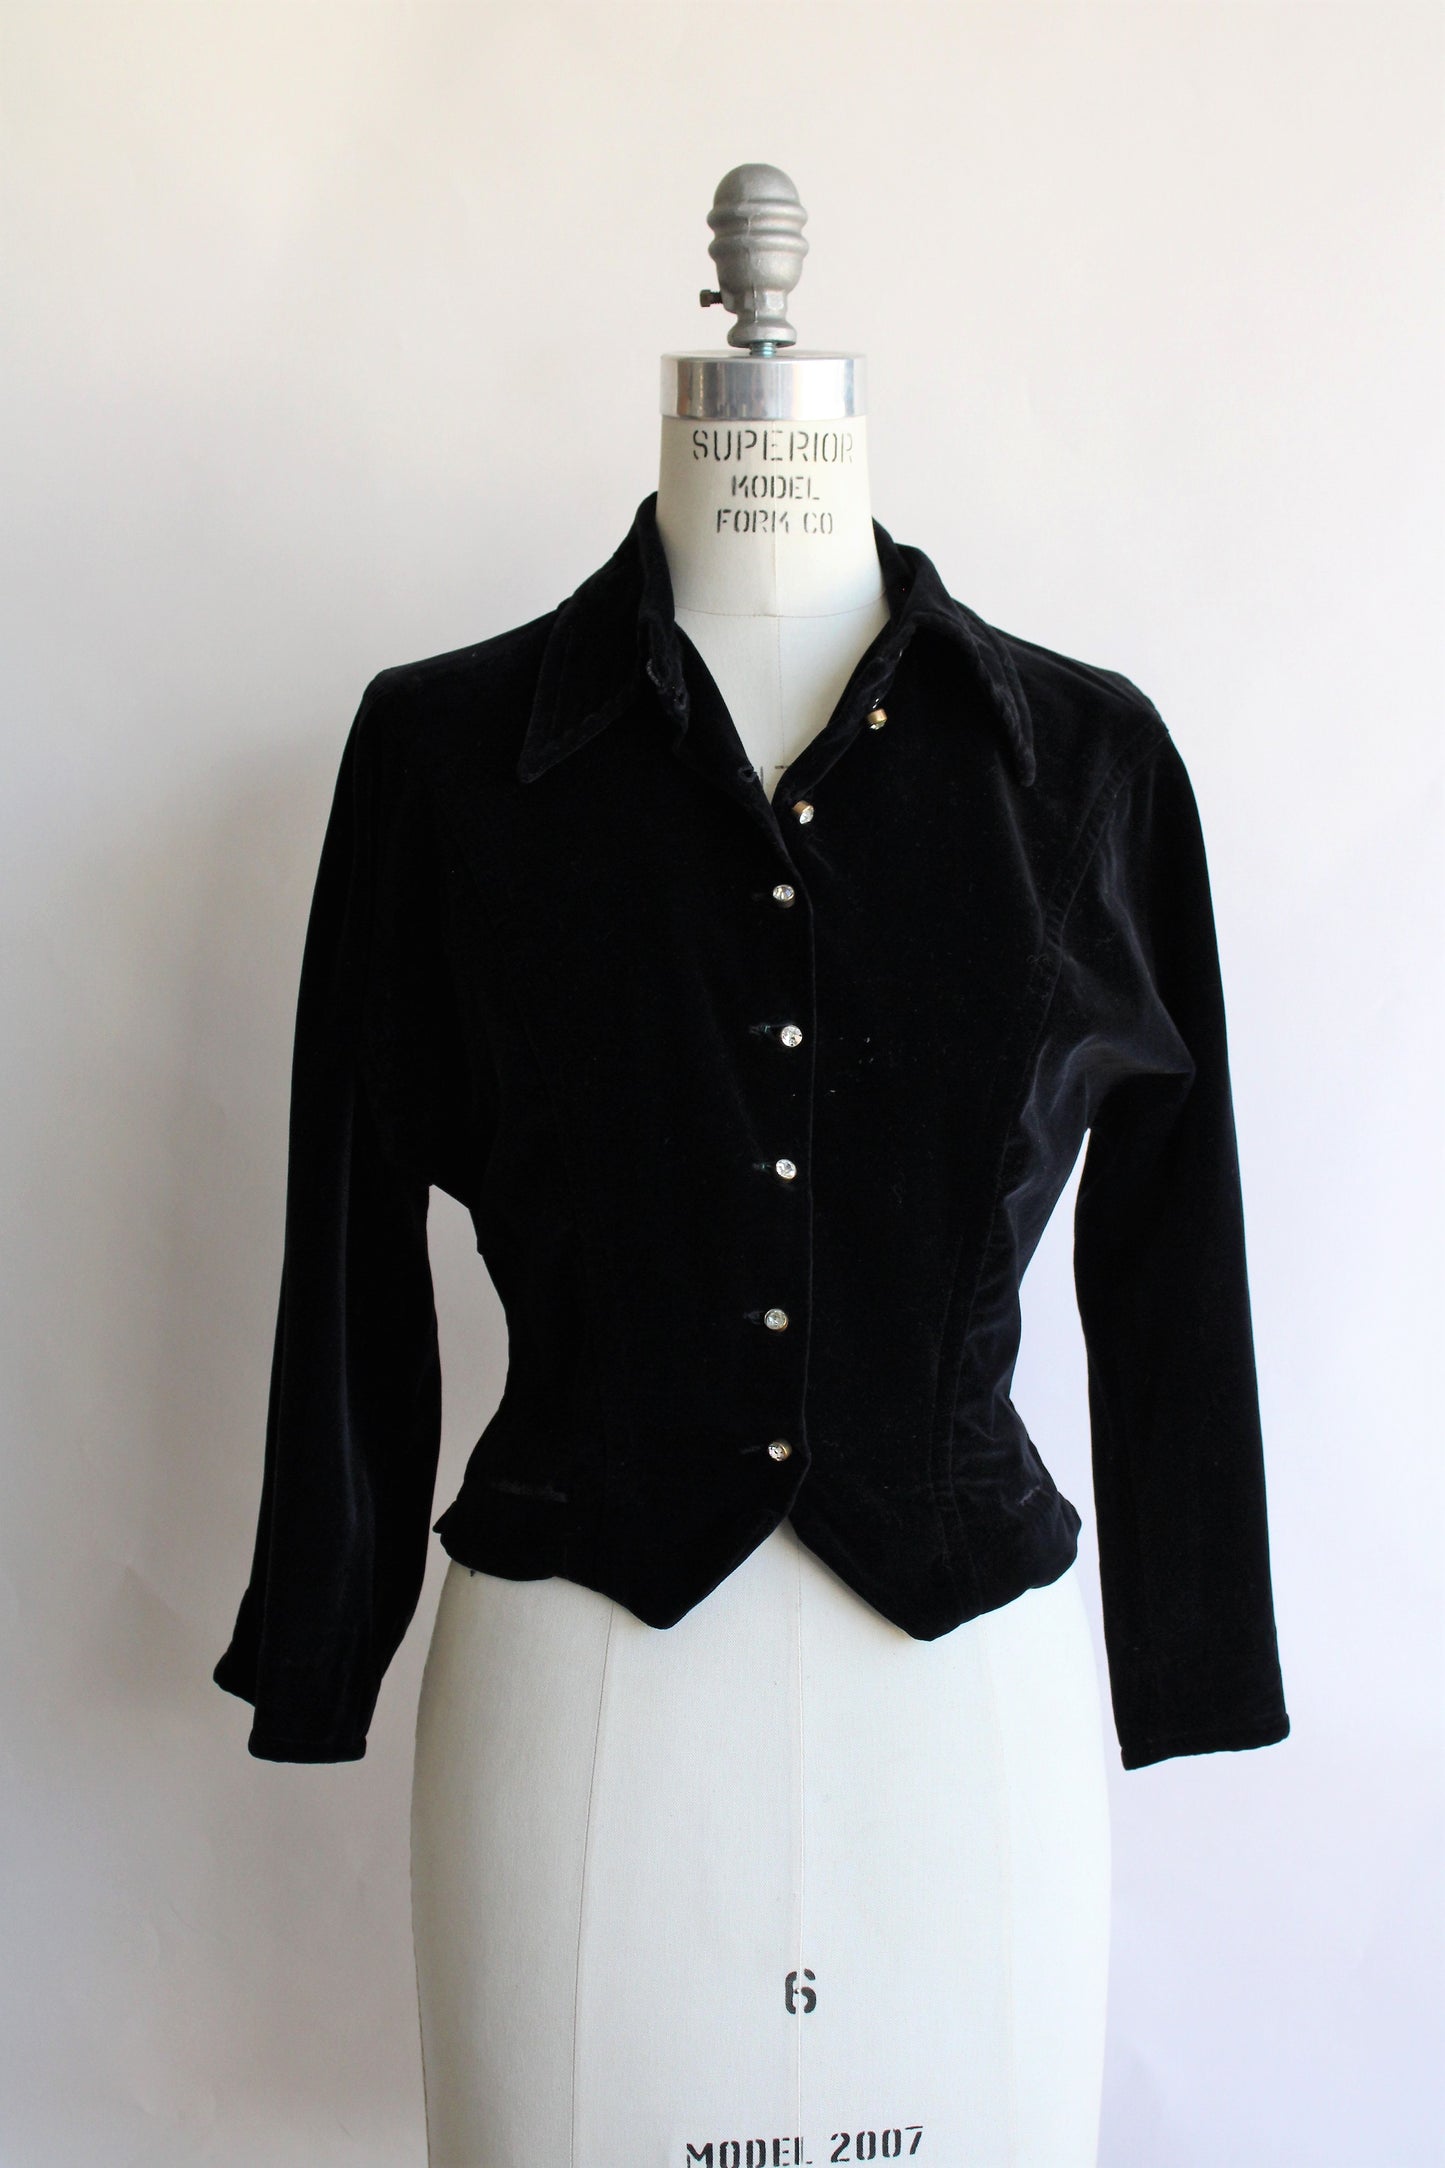 Vintage 1950s Koret Black Velvet Jacket